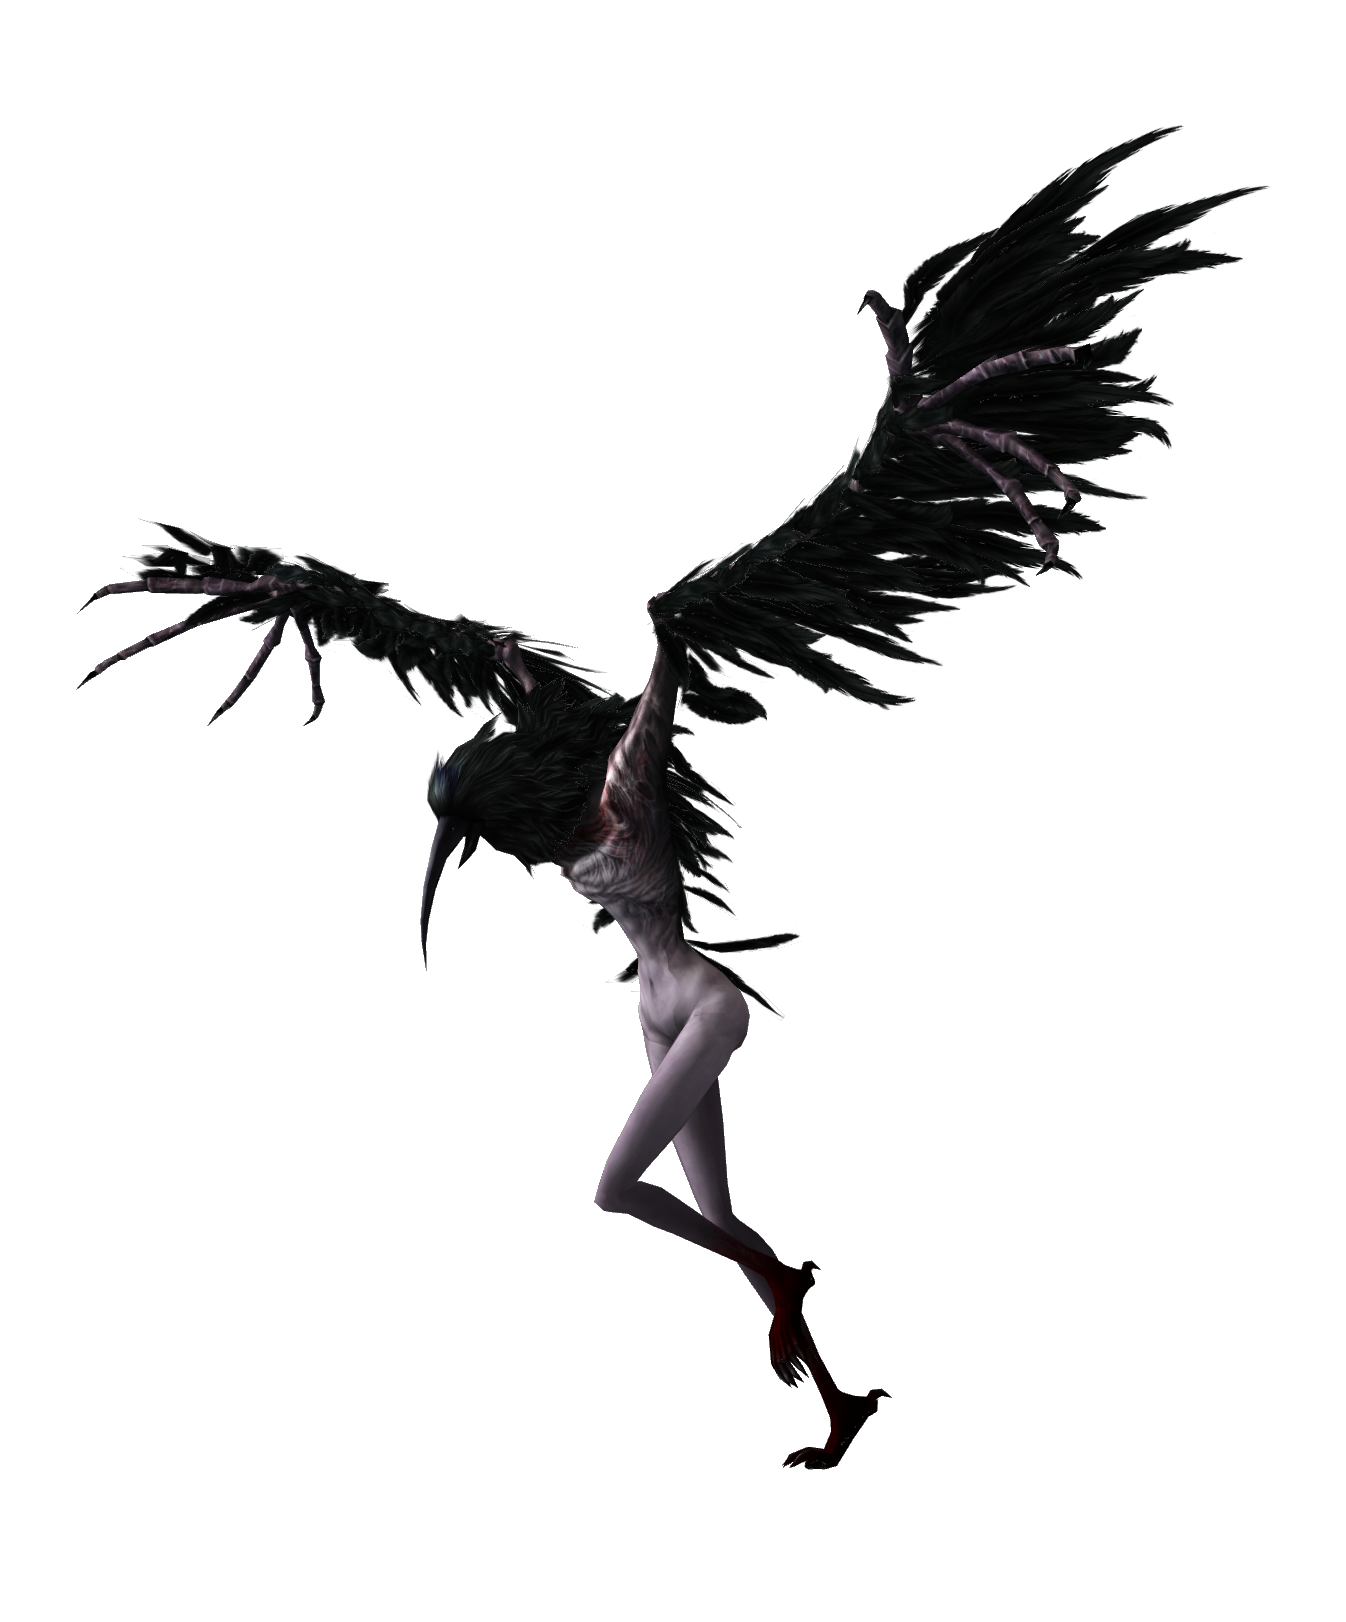 Dark Souls: Crow demon by Tokami-Fuko on DeviantArt